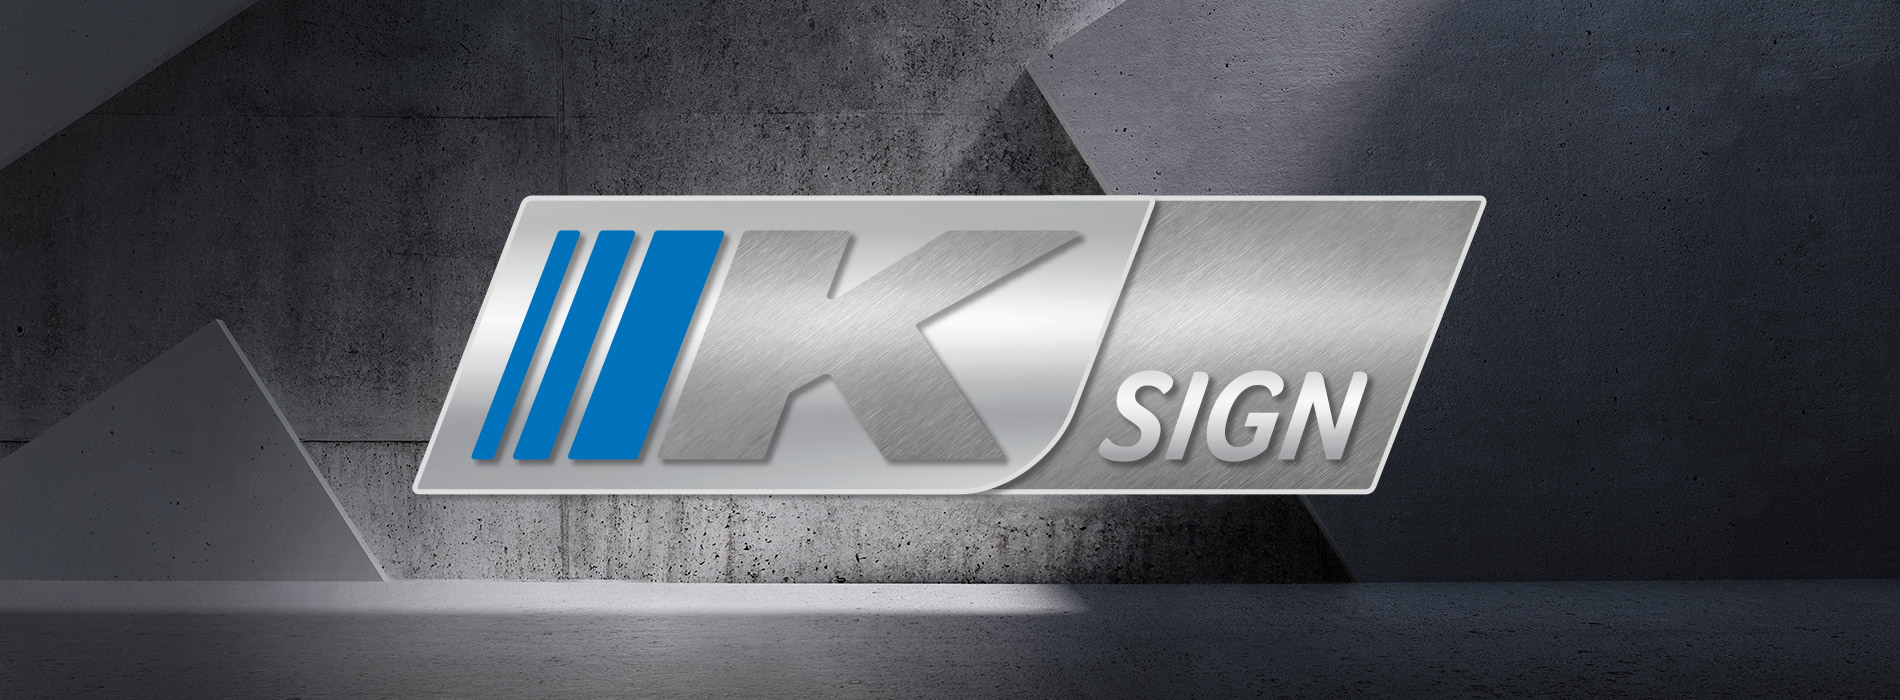 kta-knaus-2022-2023-k-sign-billboard-logo